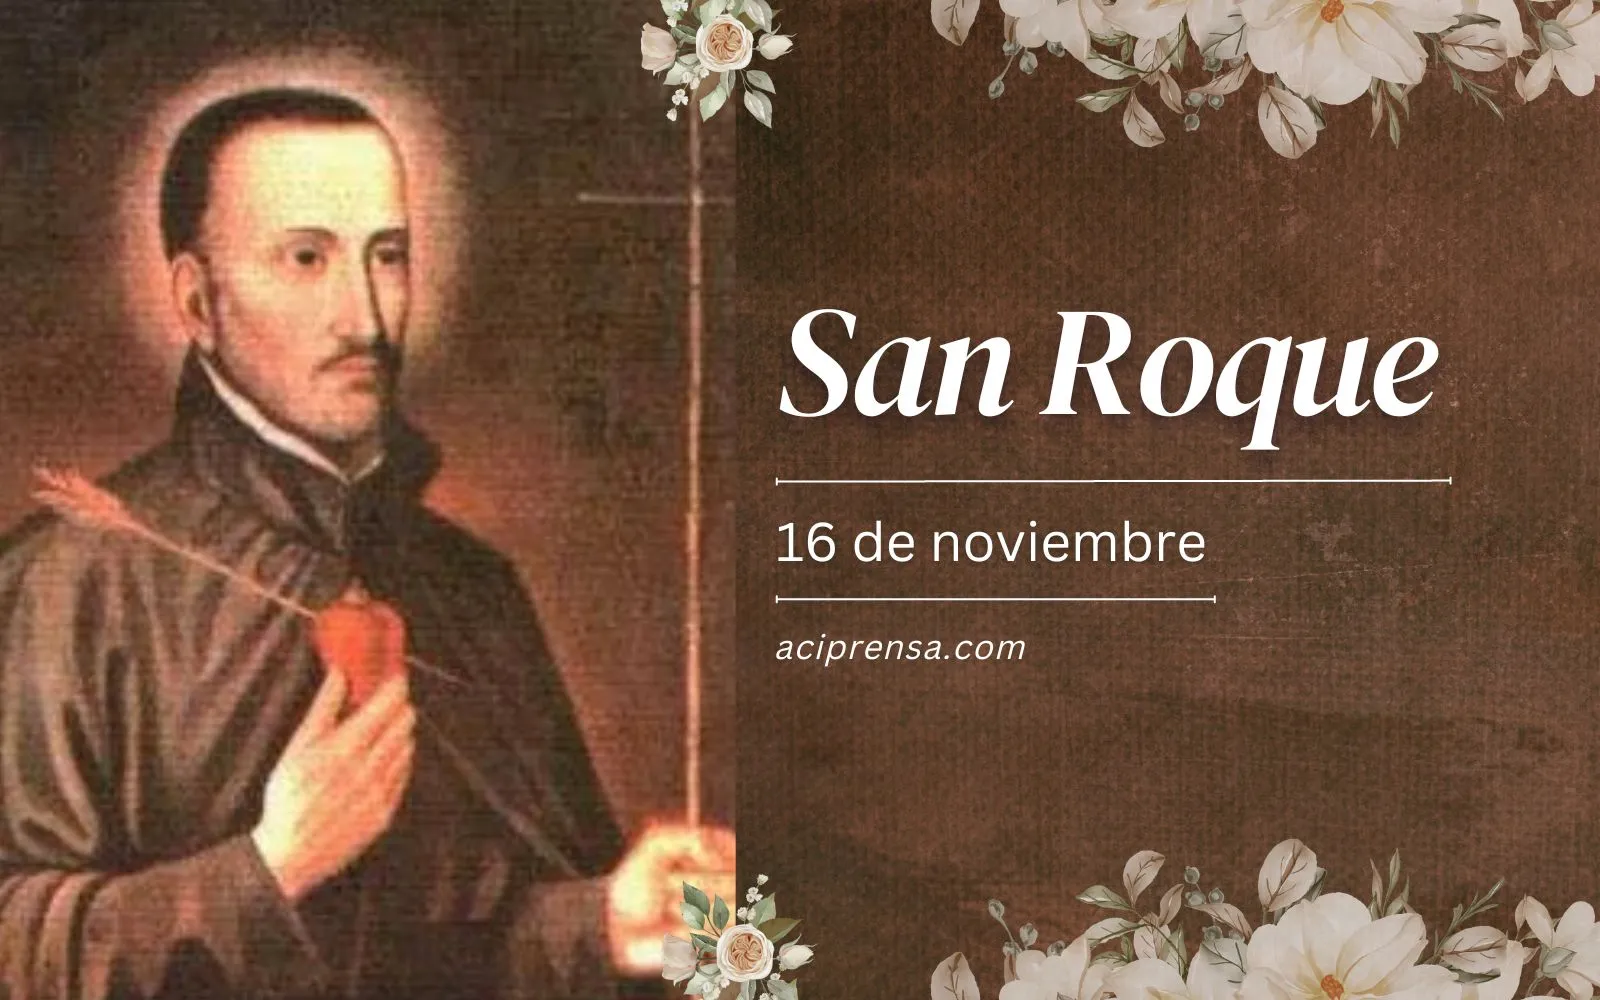 San Roque - 16 noviembre